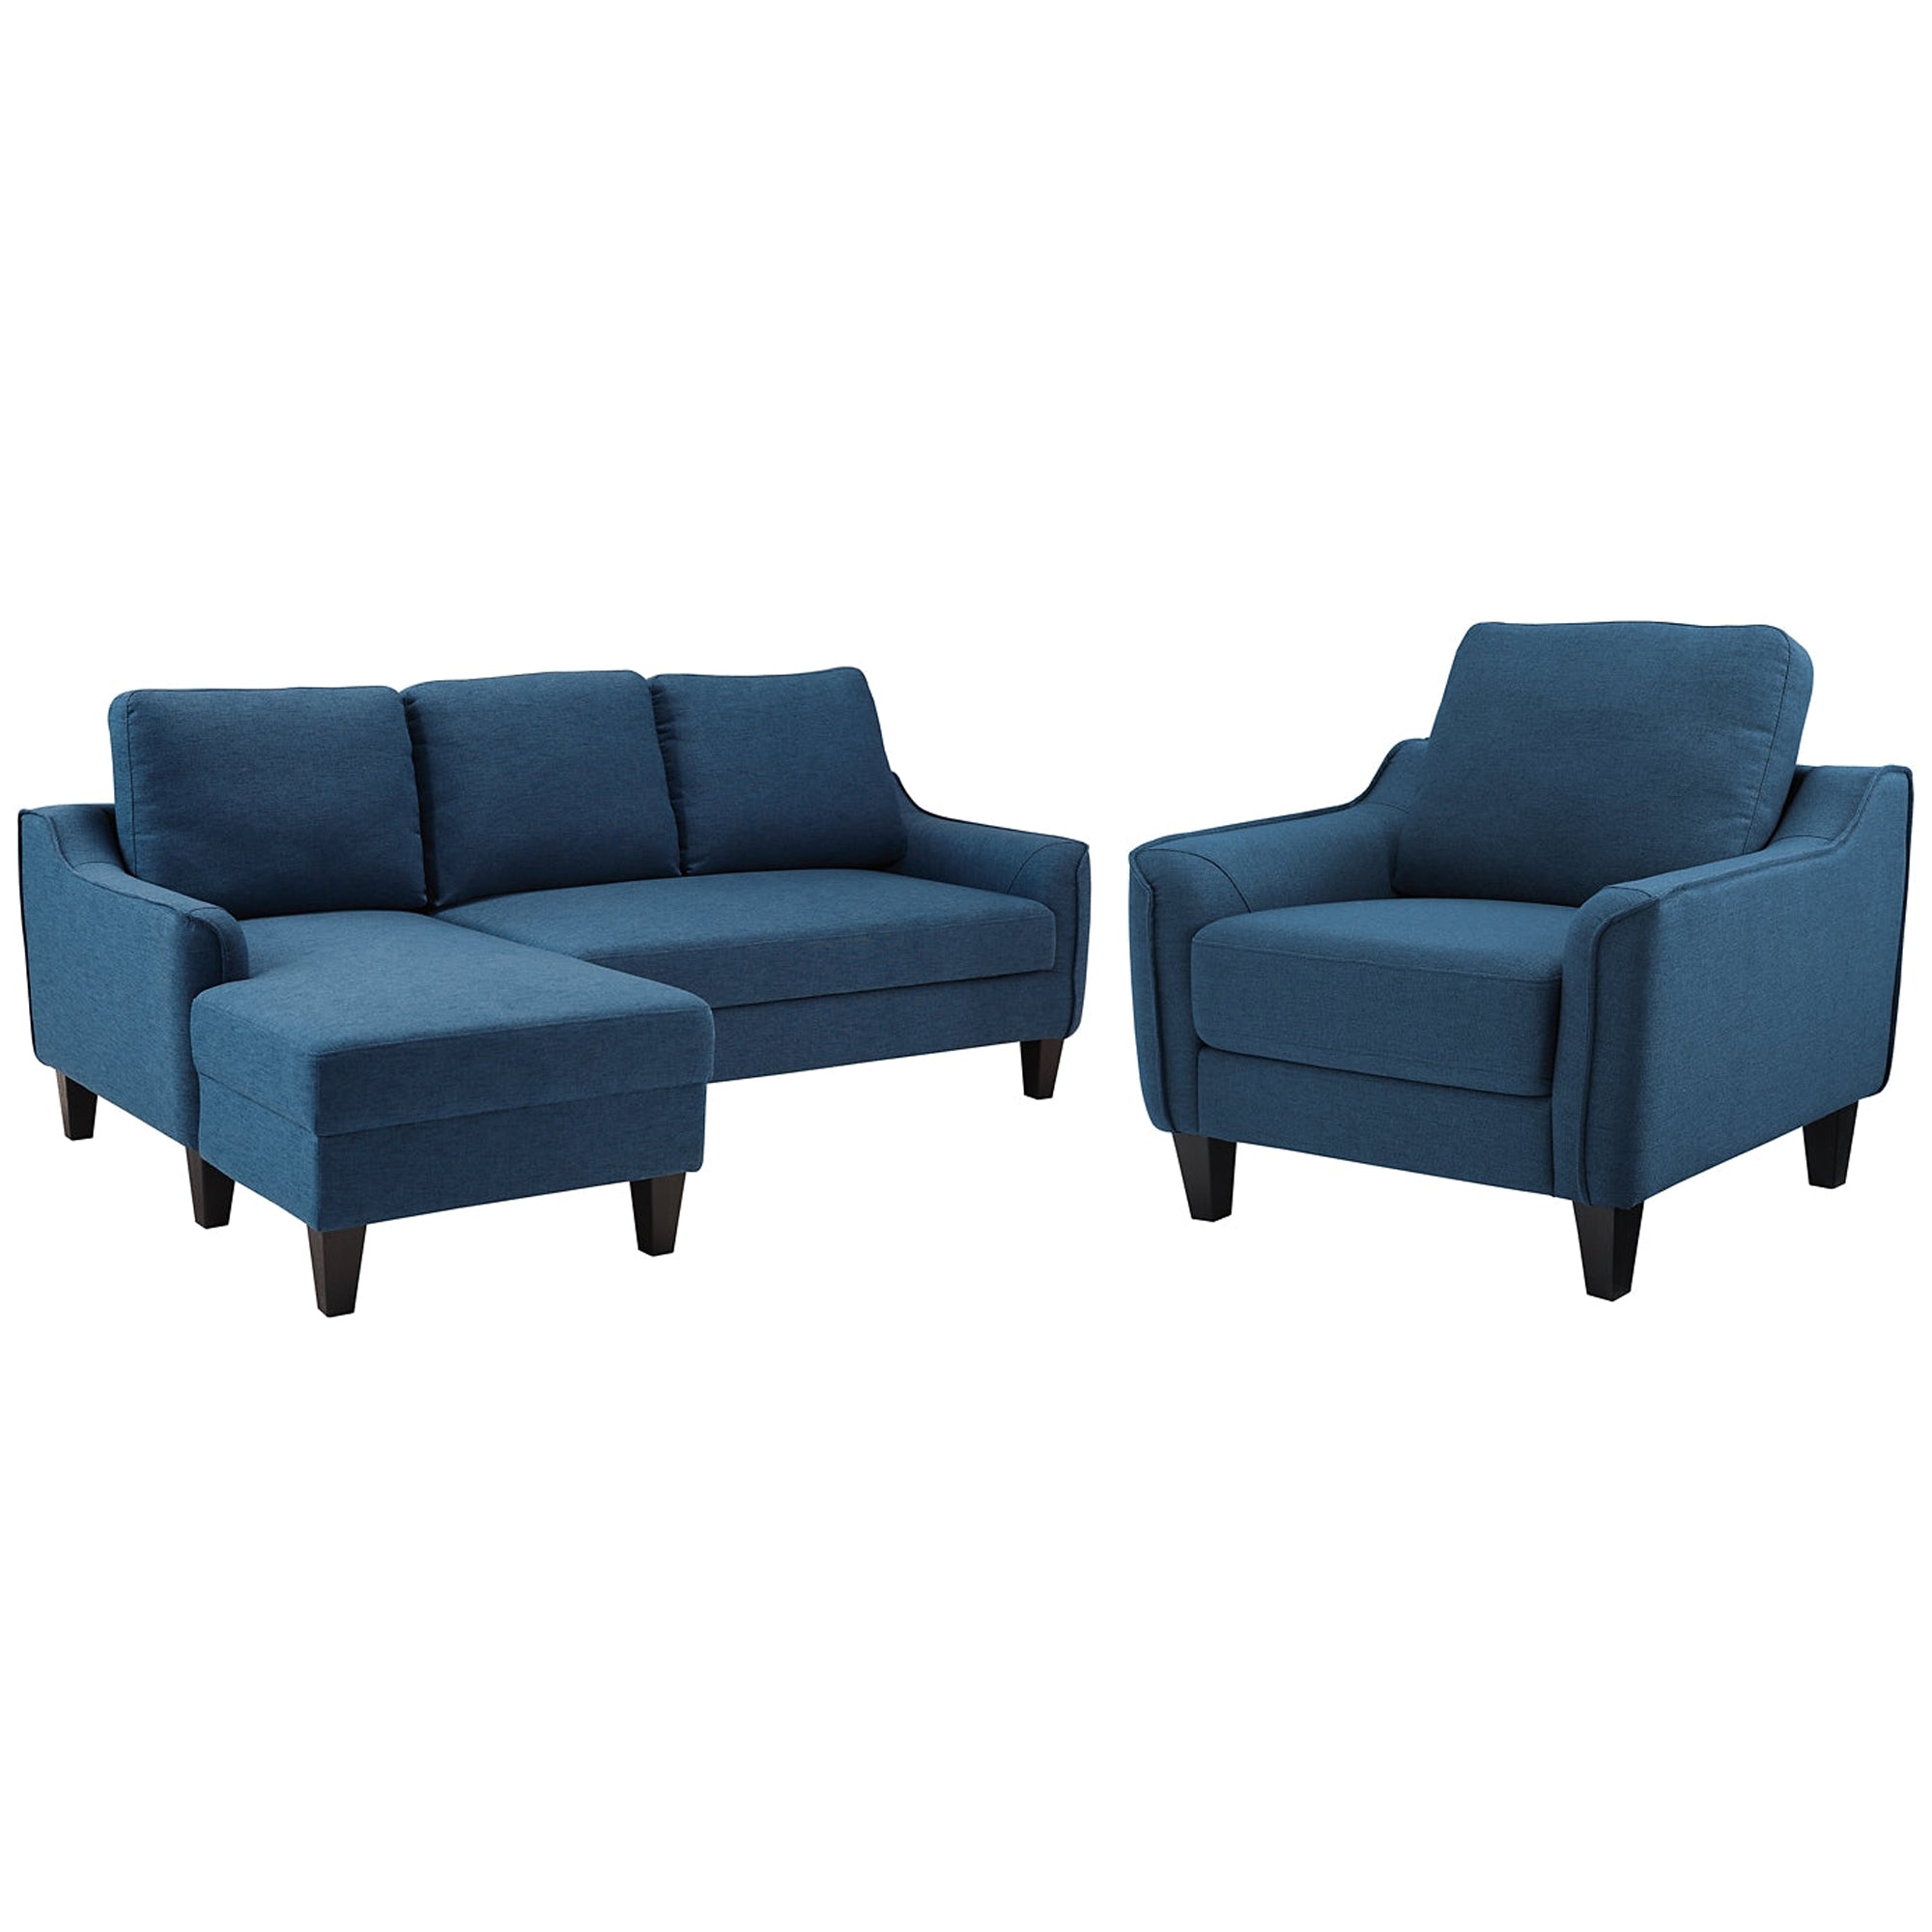 Jarreau Sofa Chaise and Chair in Blue